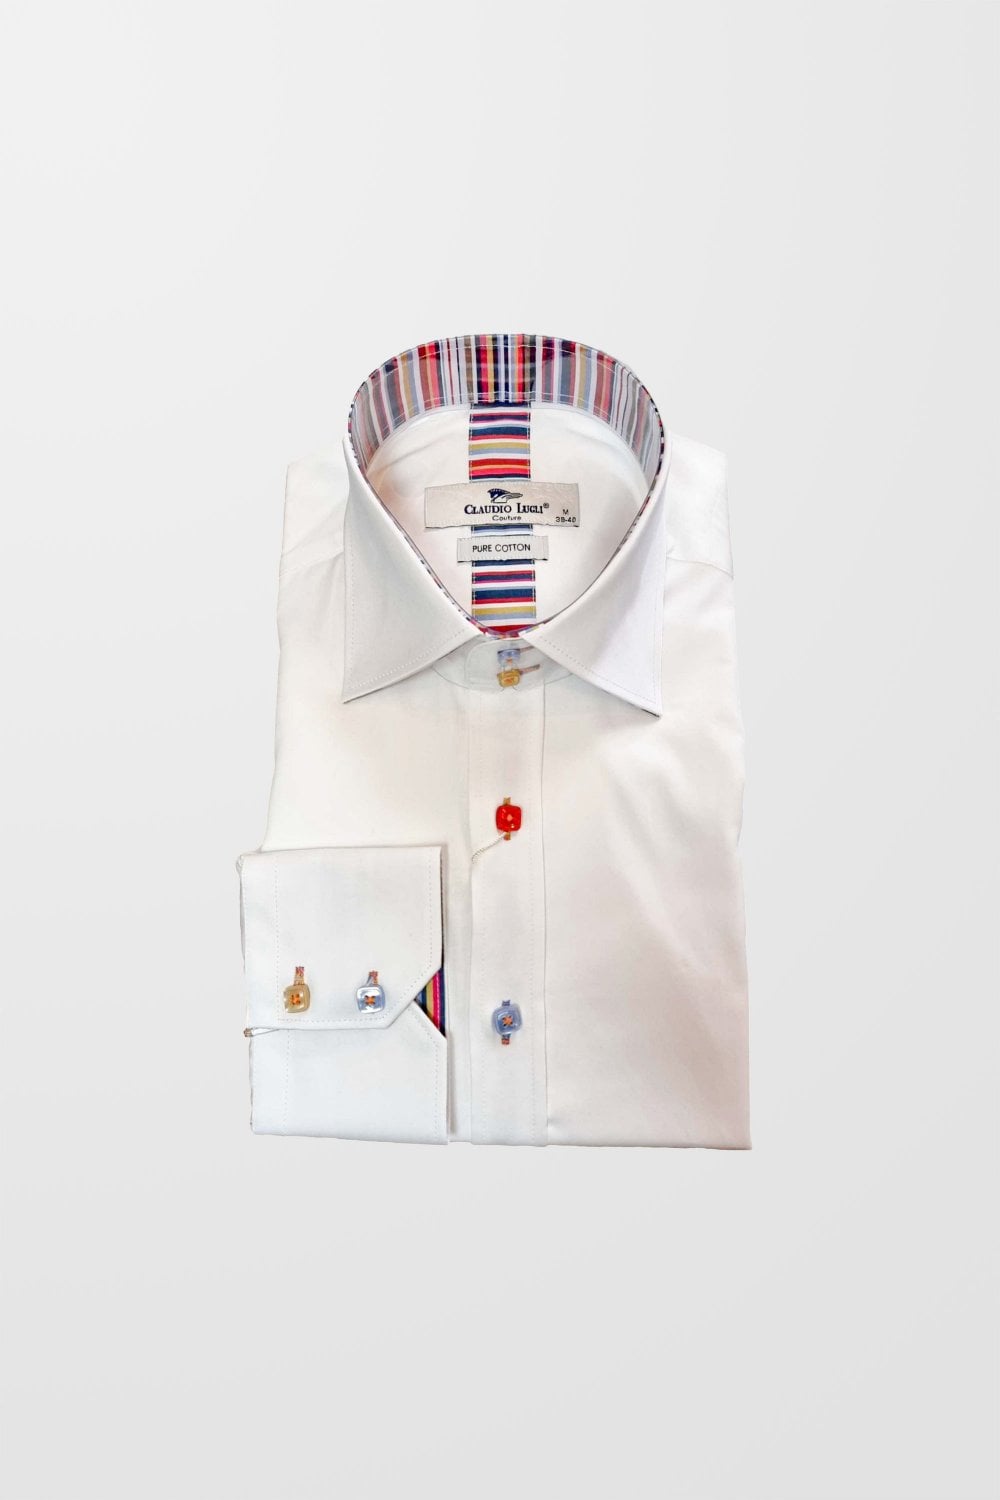 Claudio Lugli White Shirt with Stripe Detail (CP6752)